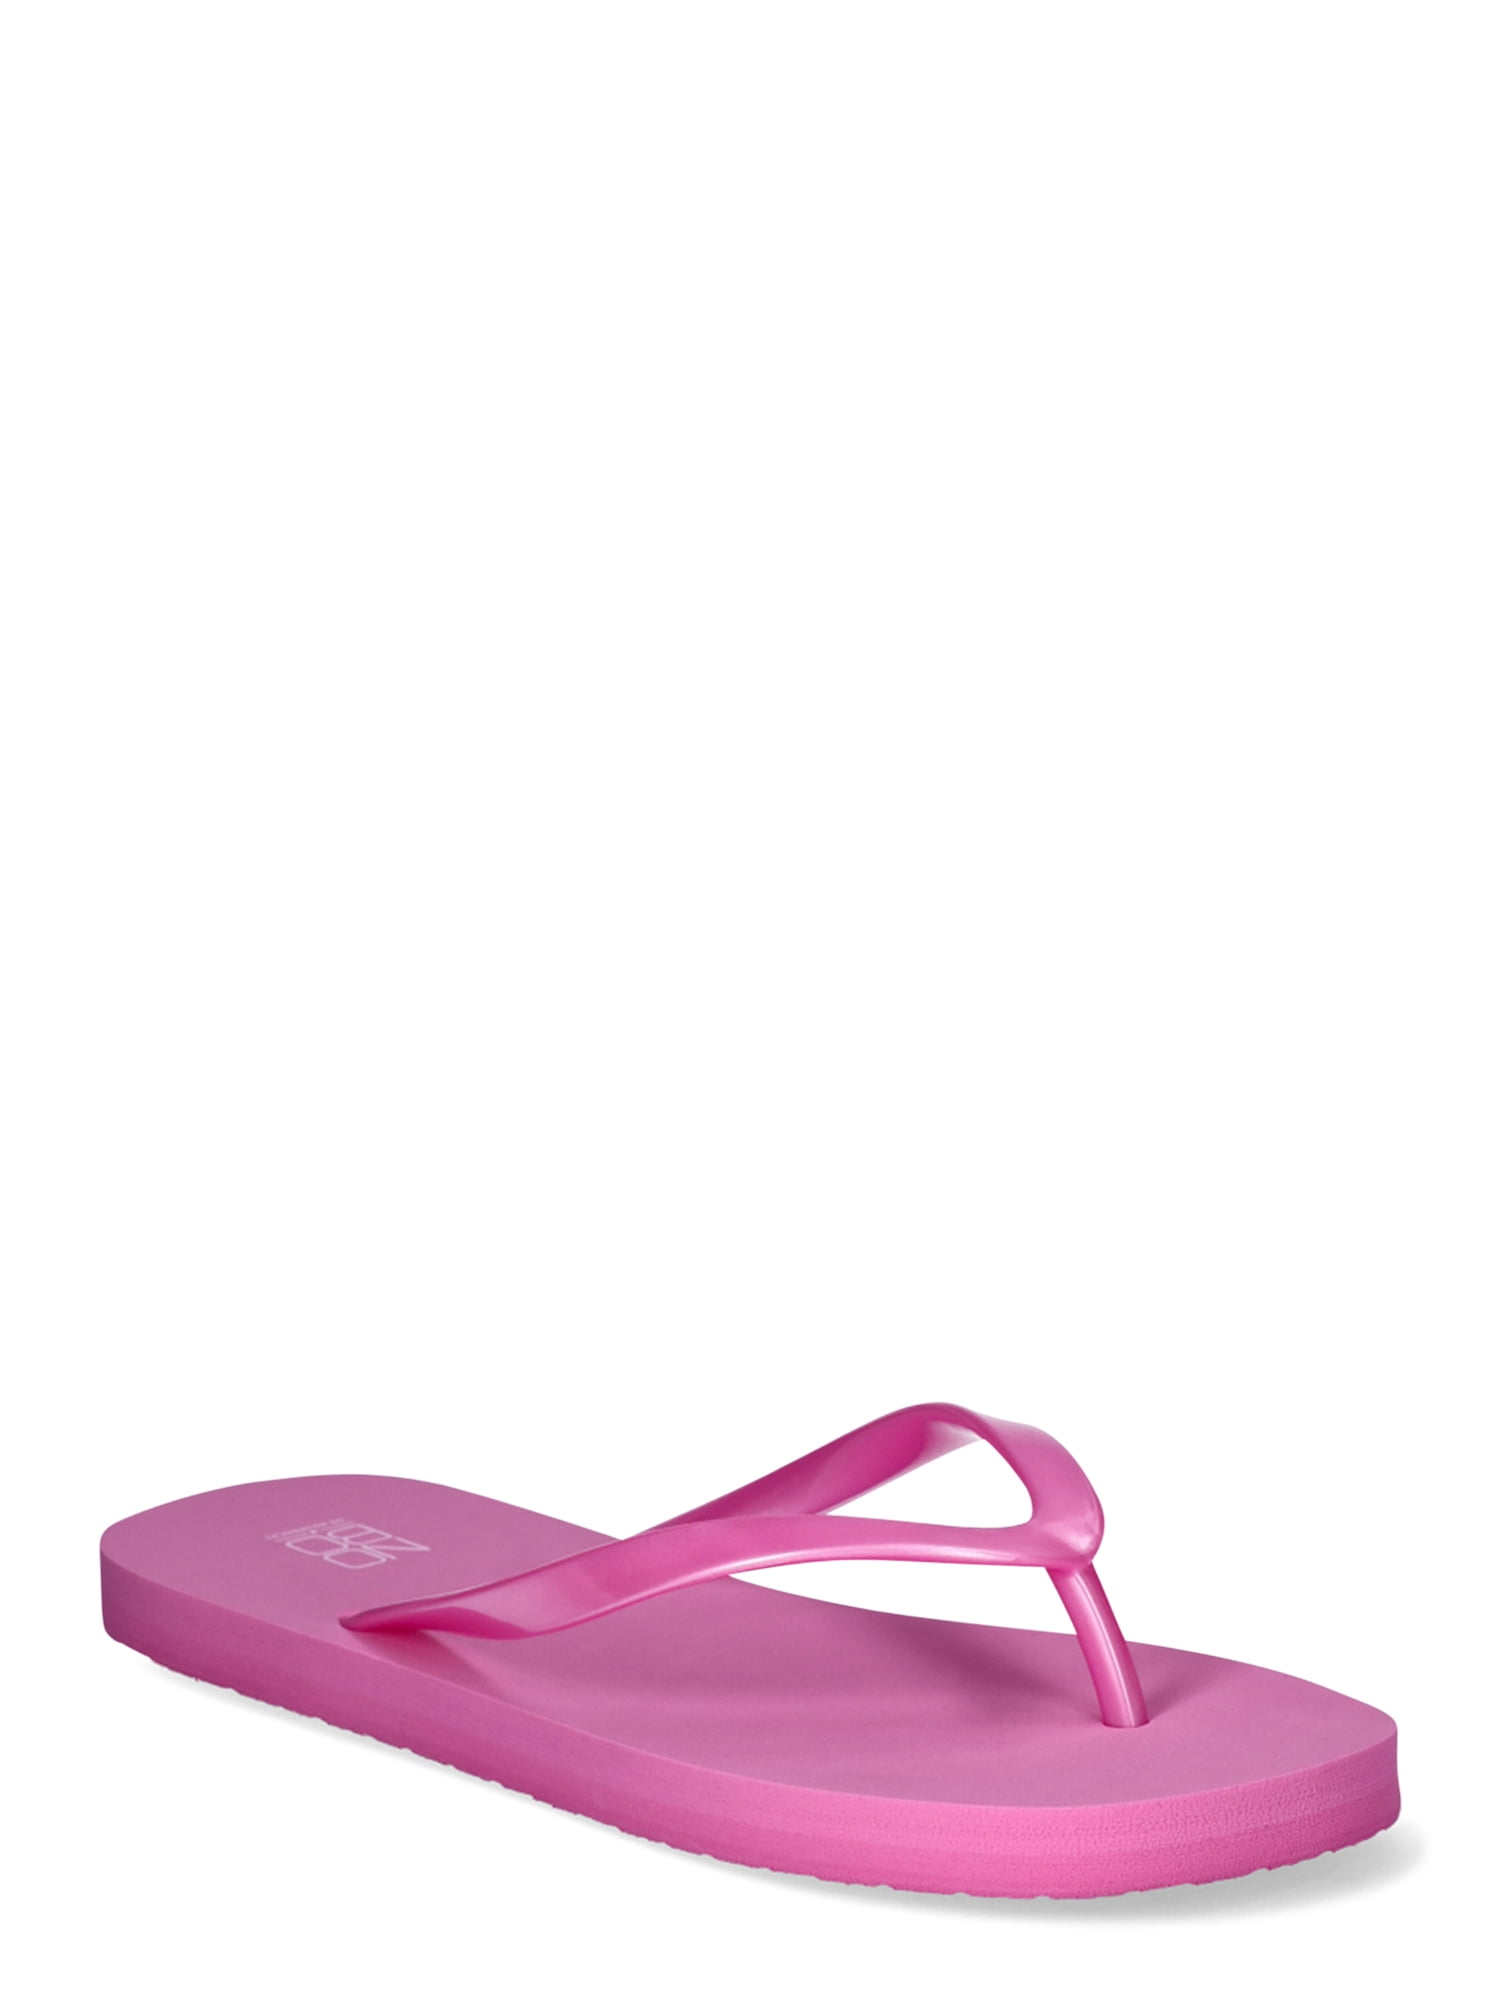 No Boundaries Women’s Flip Flops, Sizes 6-11 - Walmart.com